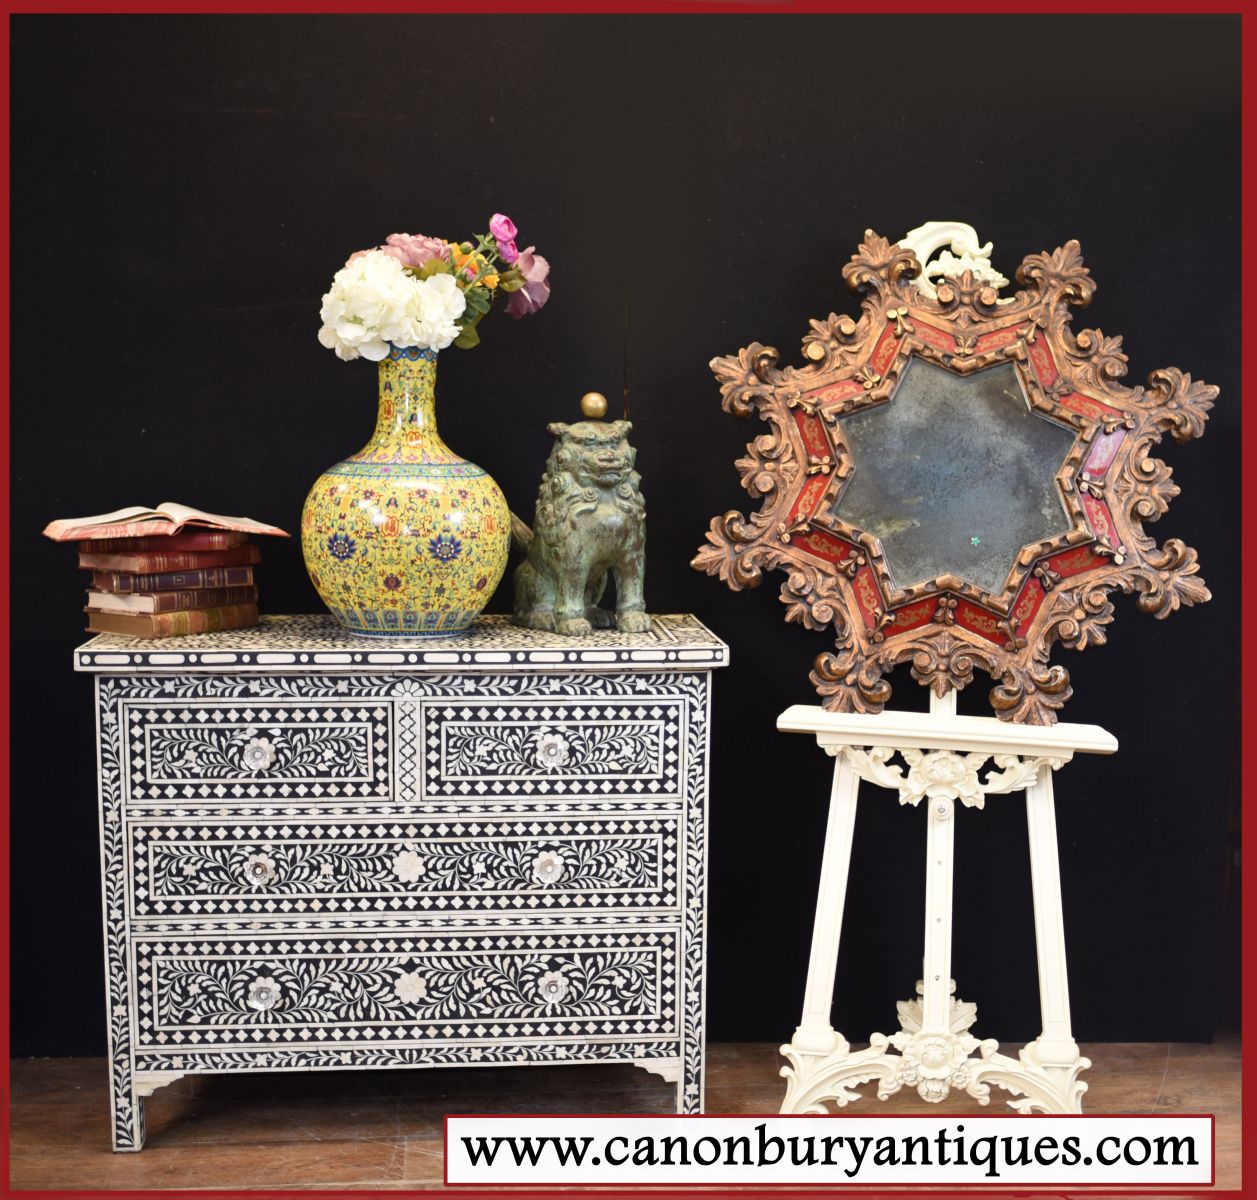 Buy antique furniture in Hertfordshire